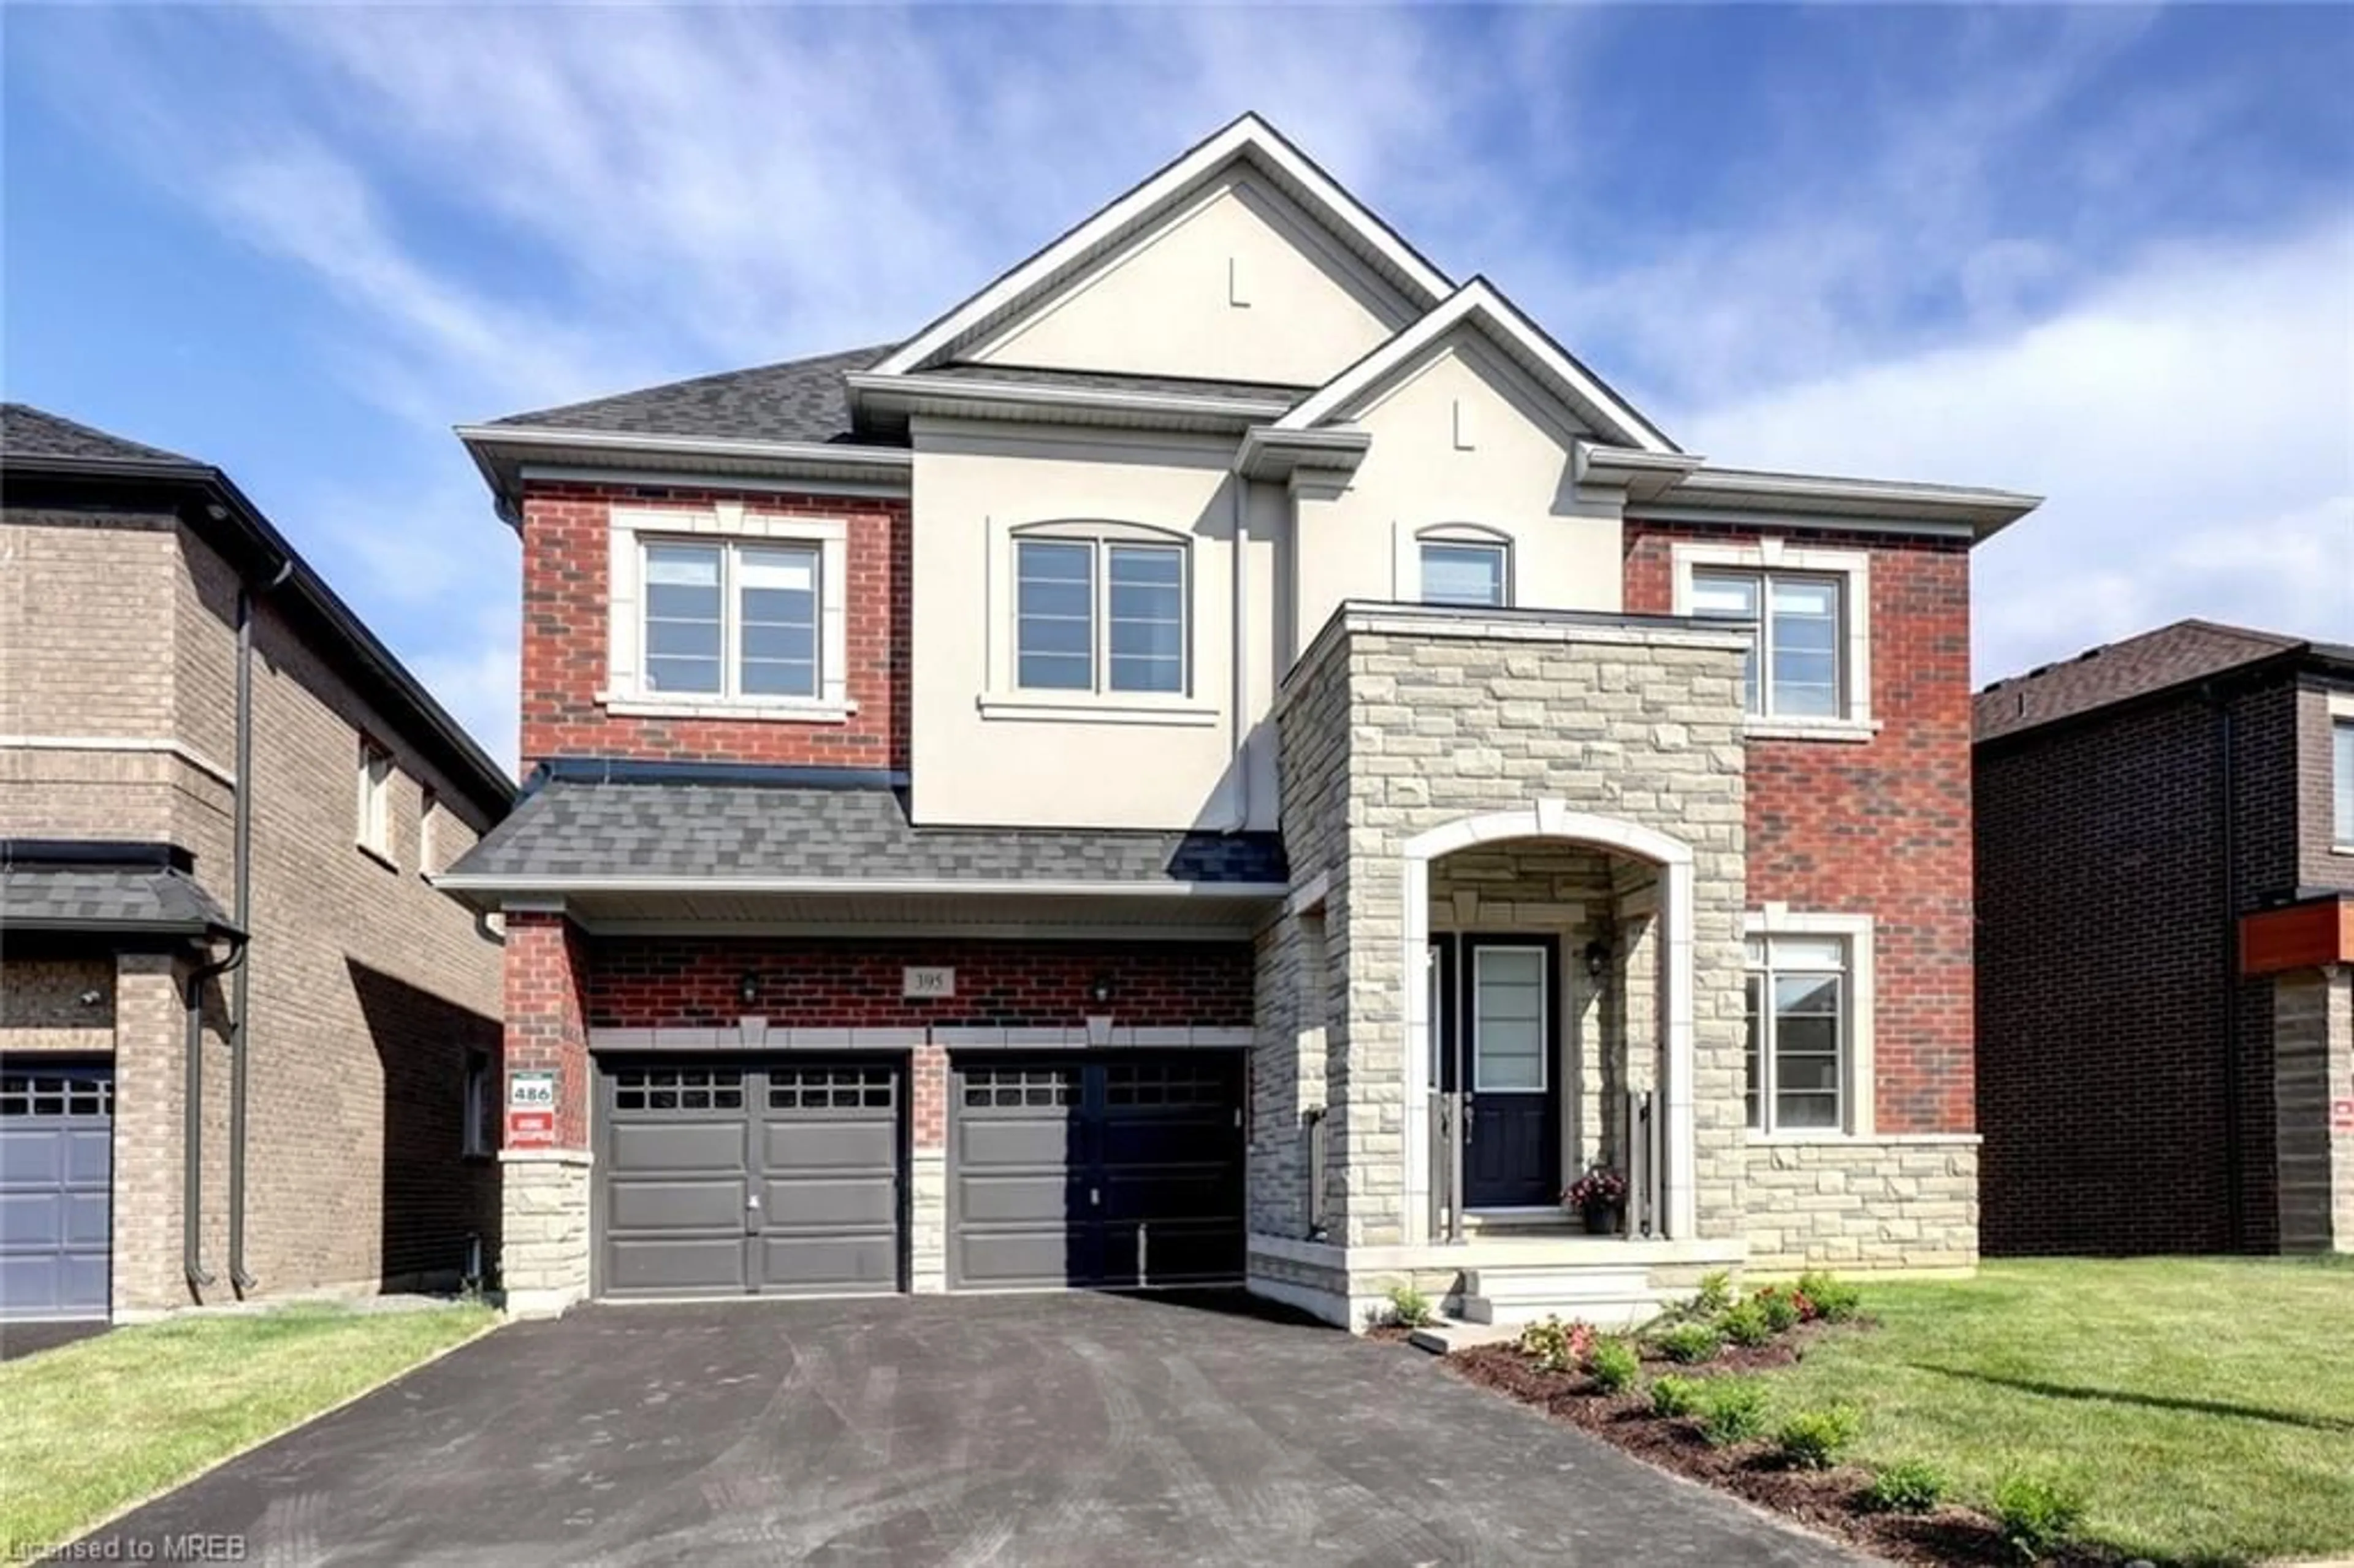 Home with brick exterior material for 395 Humphrey St, Hamilton Ontario L8B 1X5